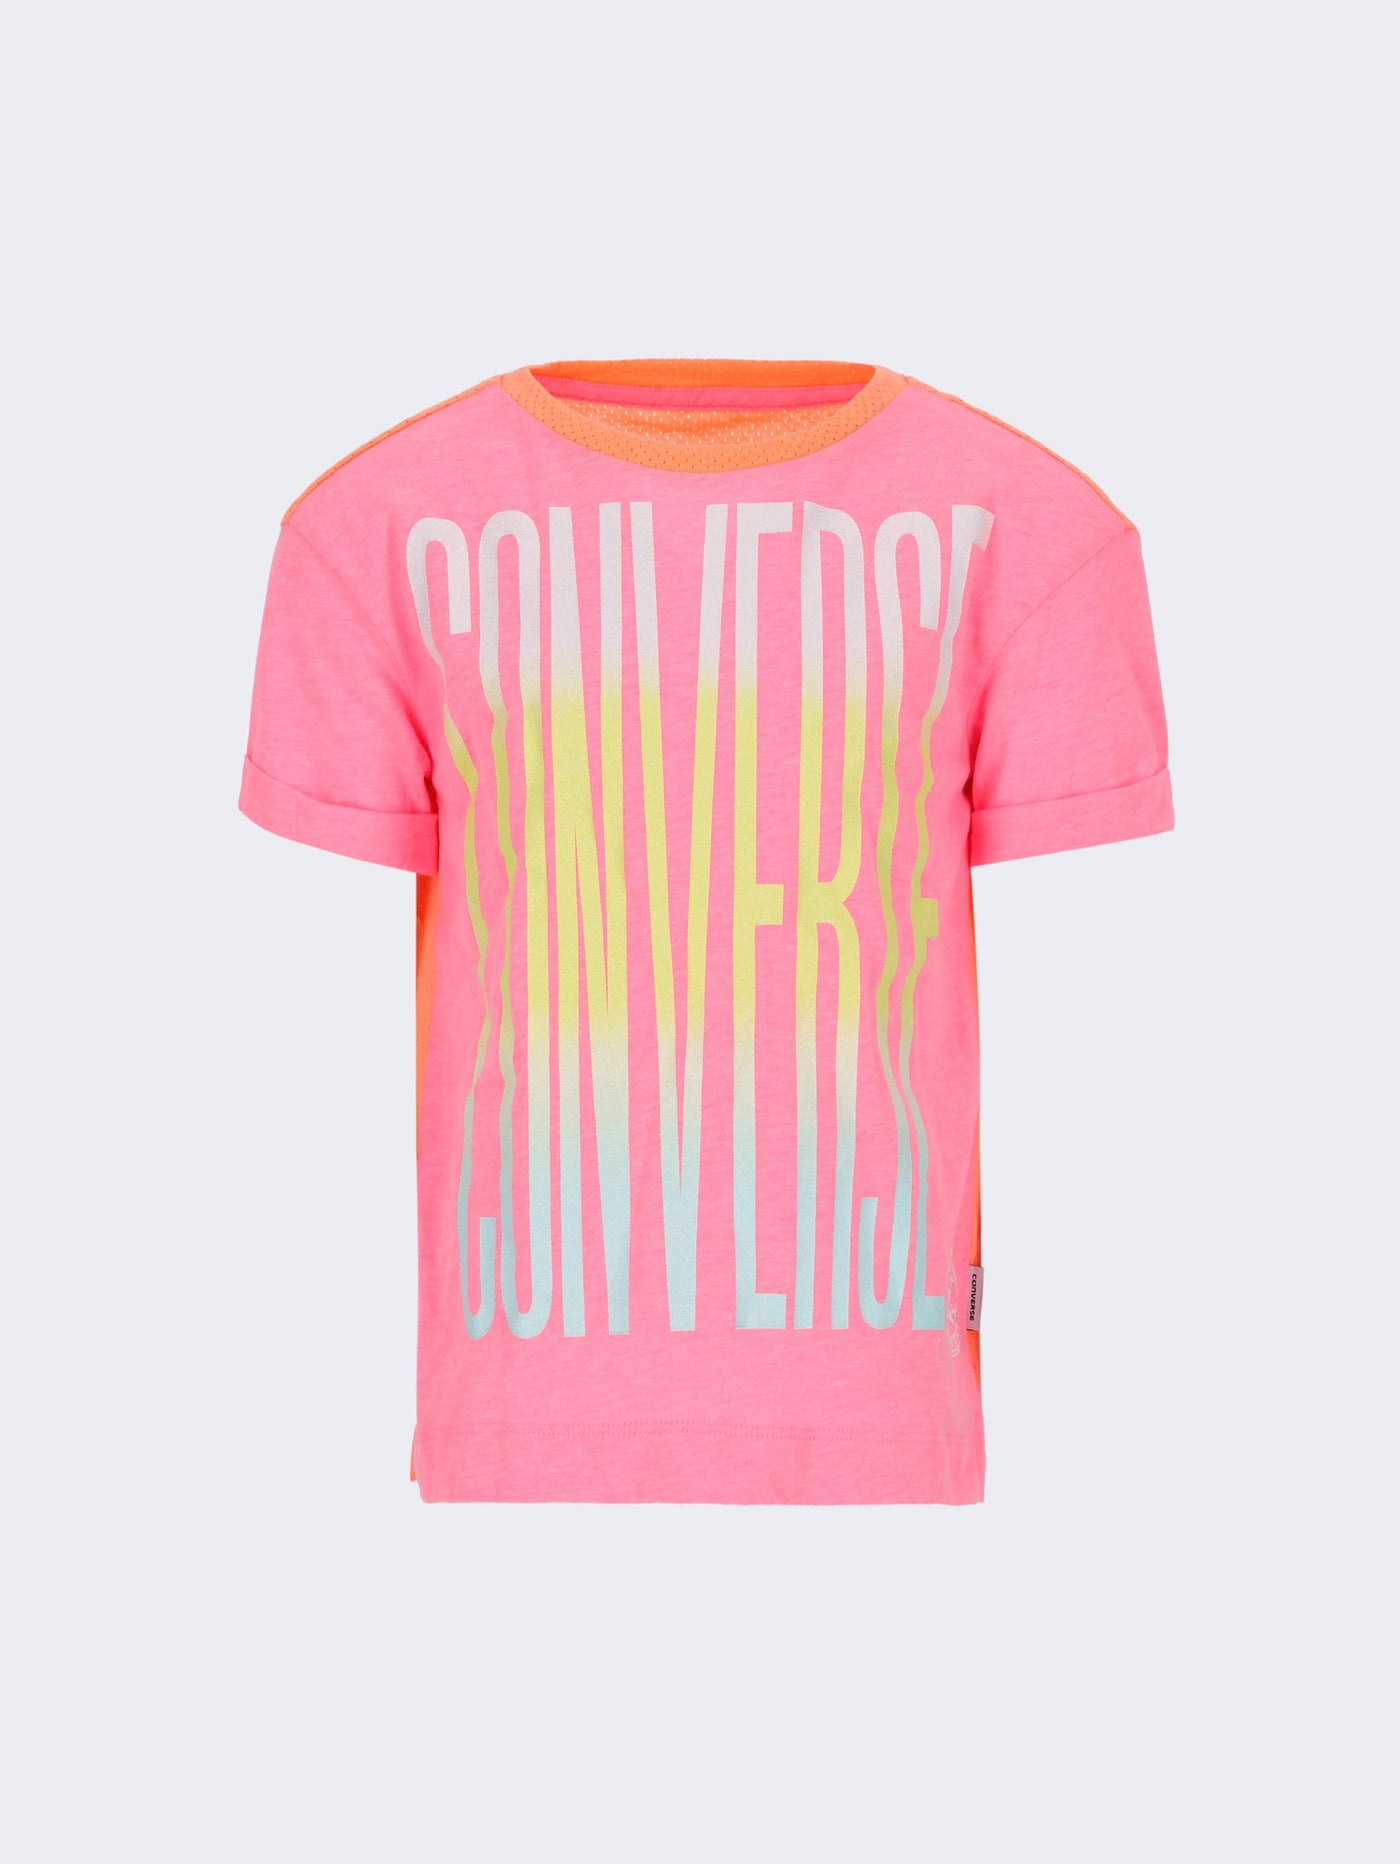 Converse Junior Girls Ombre Printed Tee Mesh T-Shirt - 466726